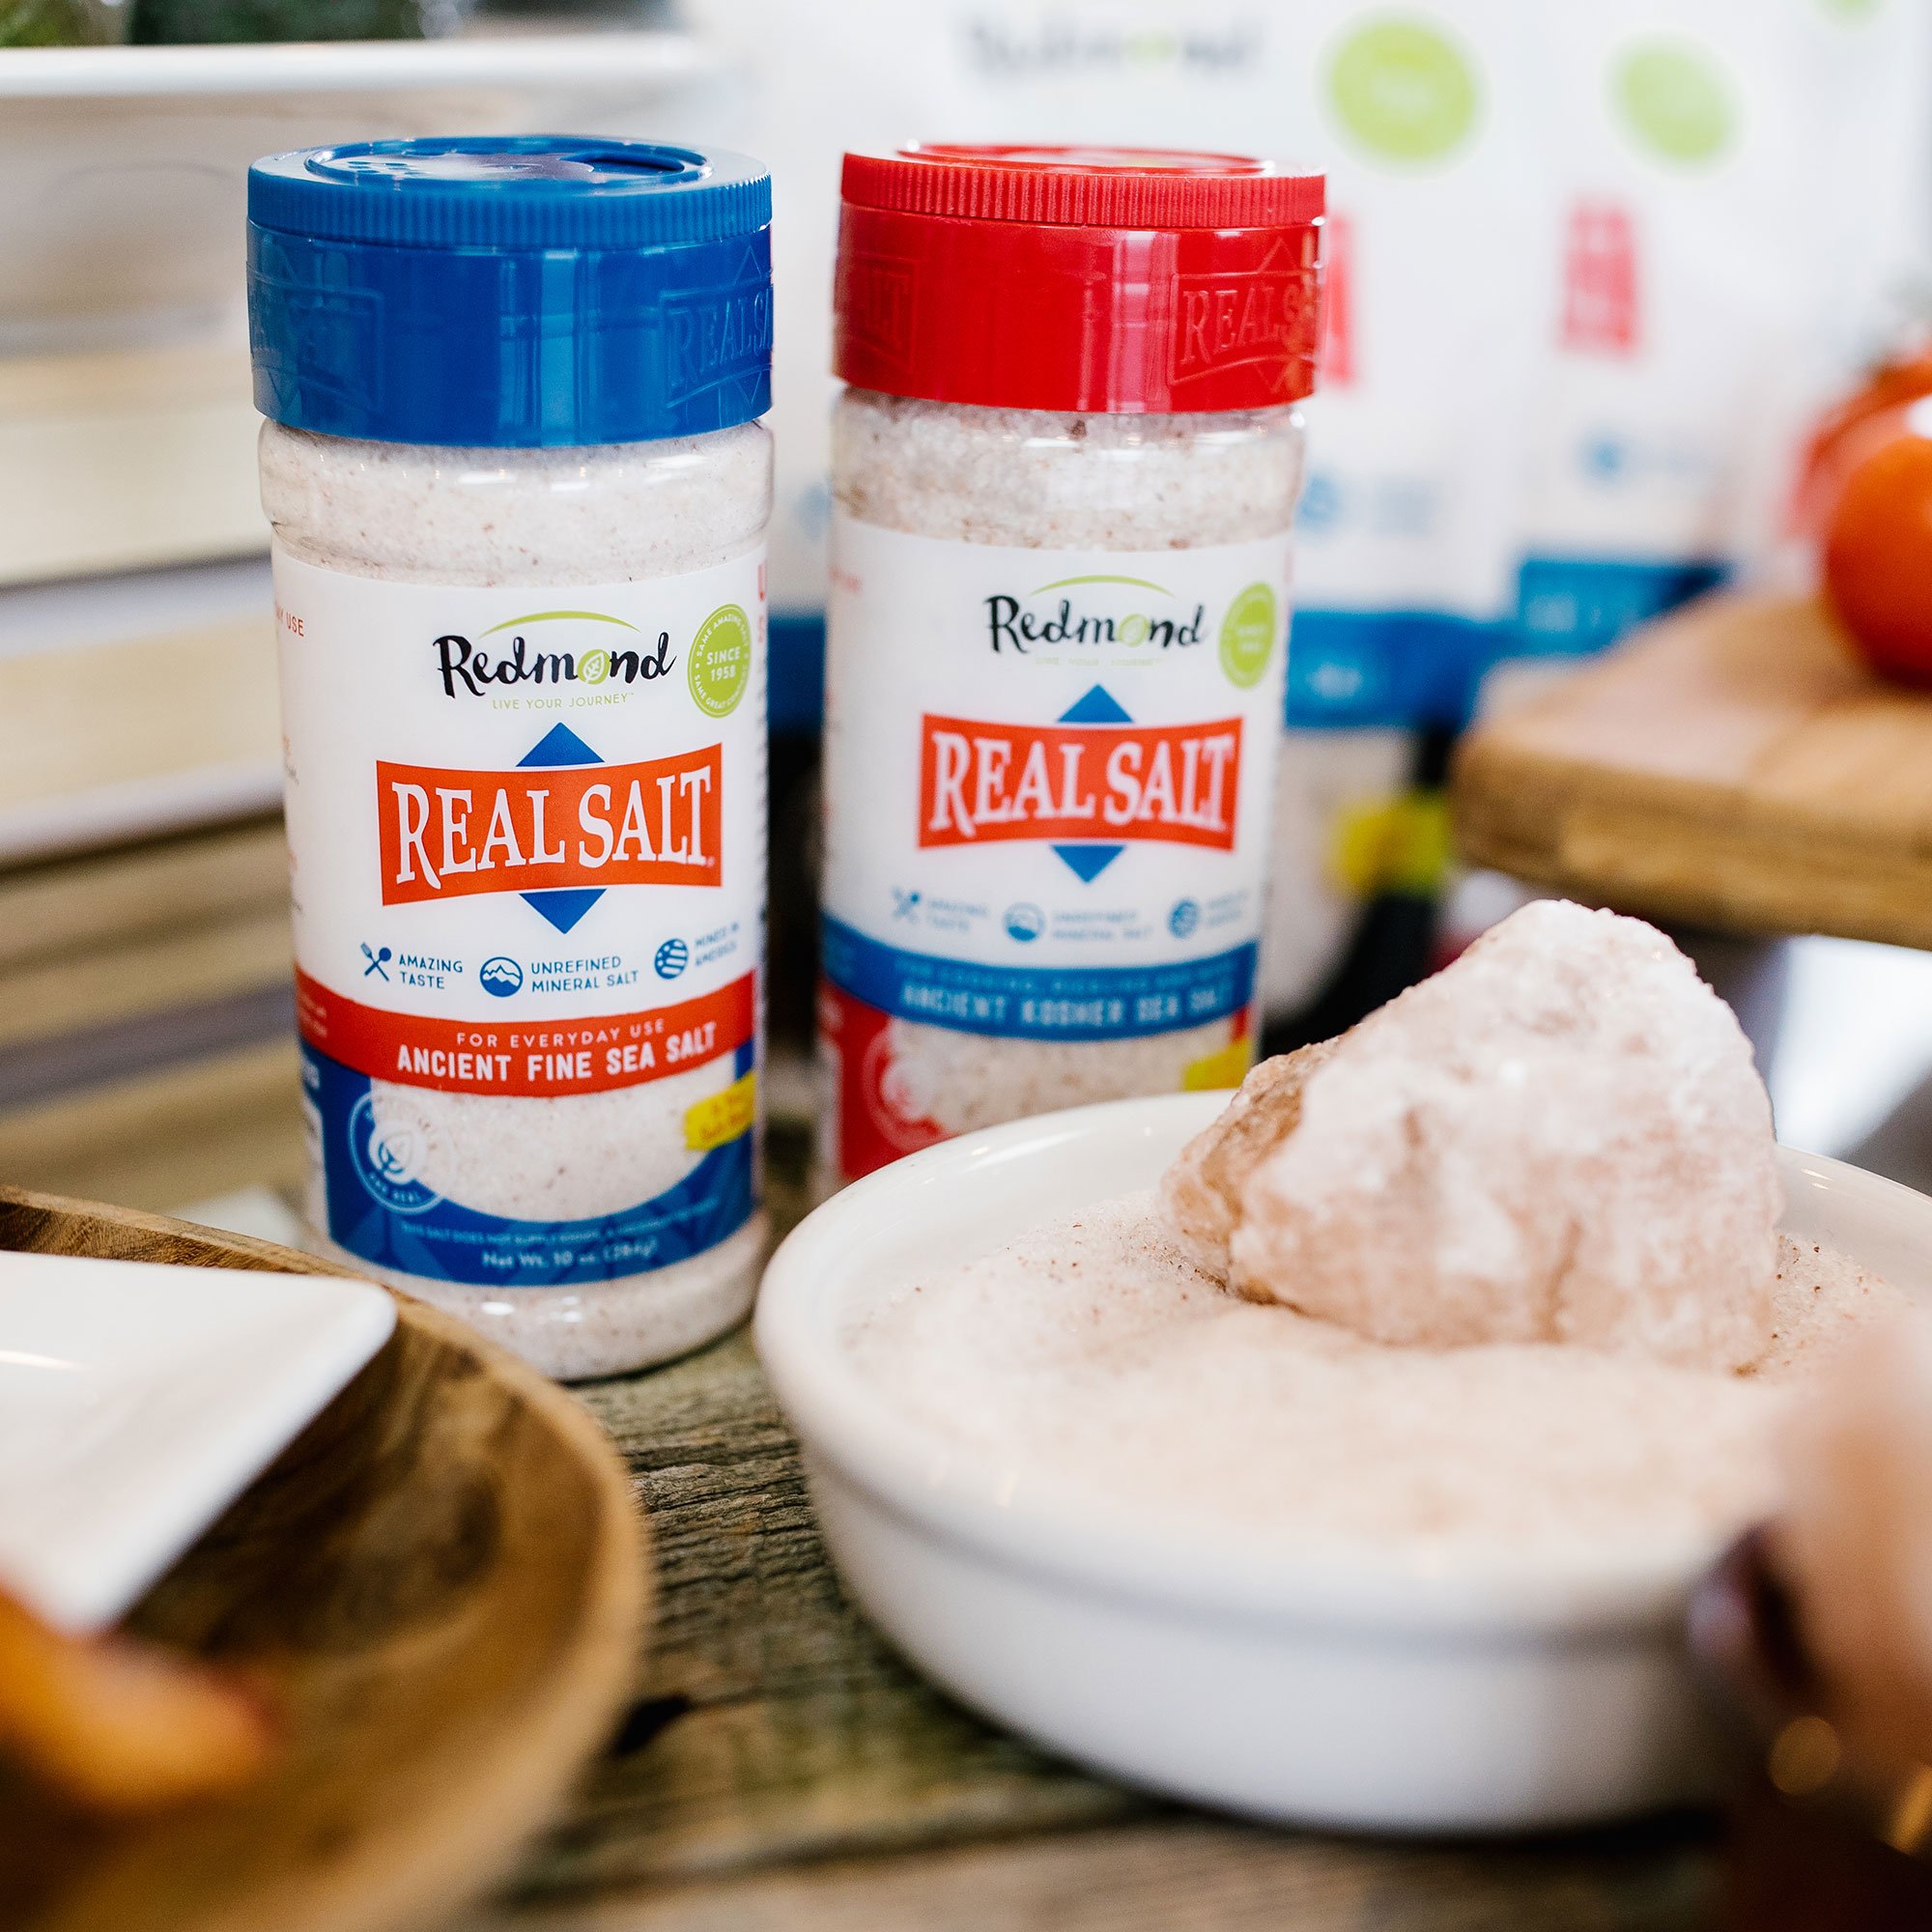 Redmond Real Salt products